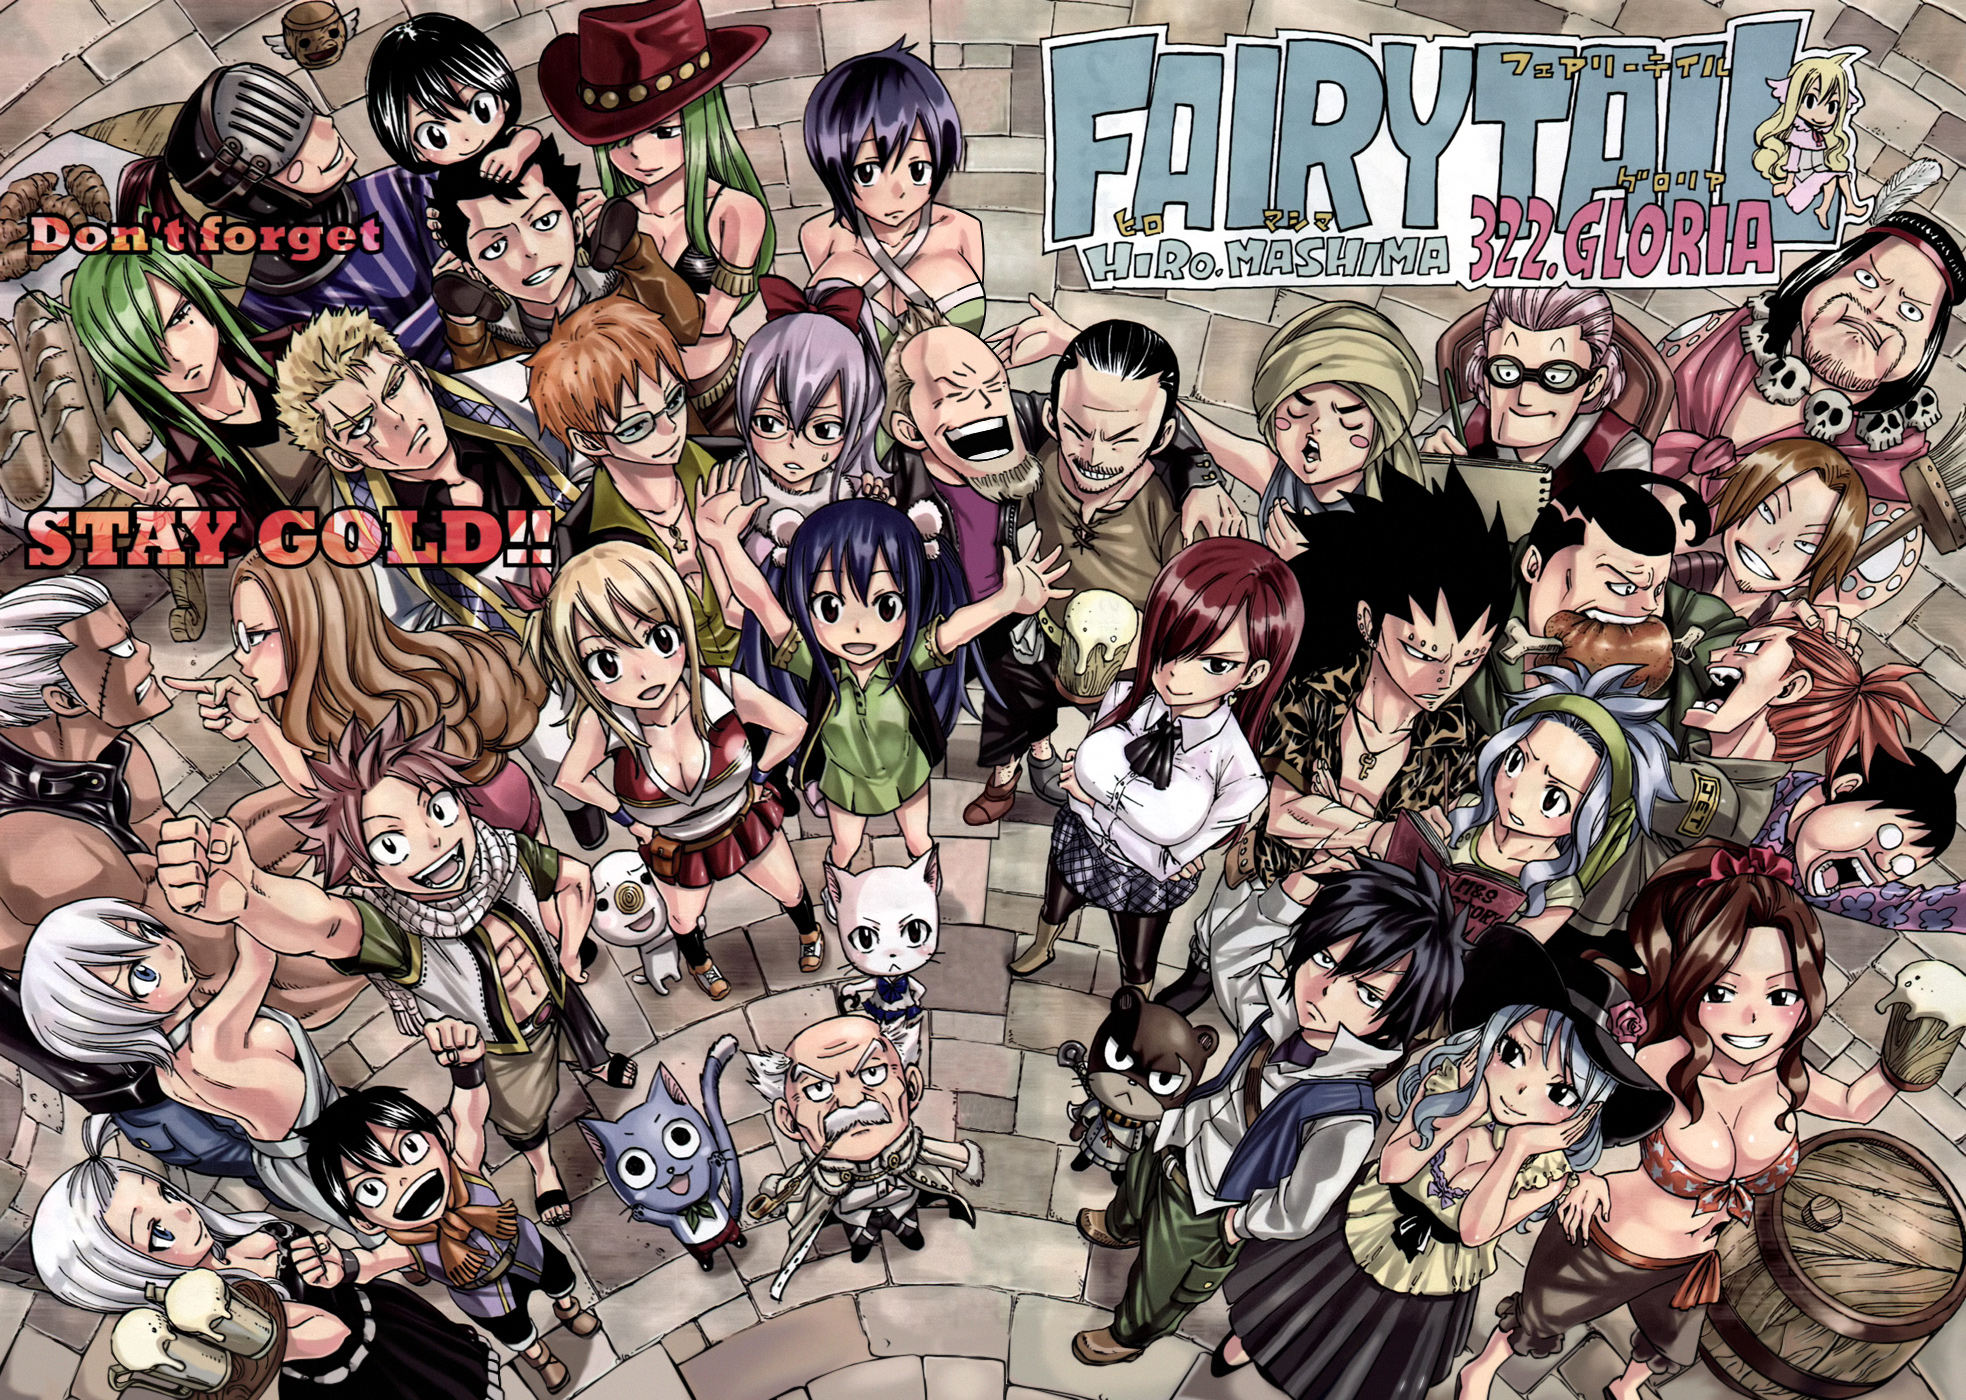 Anime Fairy Tail HD Wallpaper by Hiro Mashima